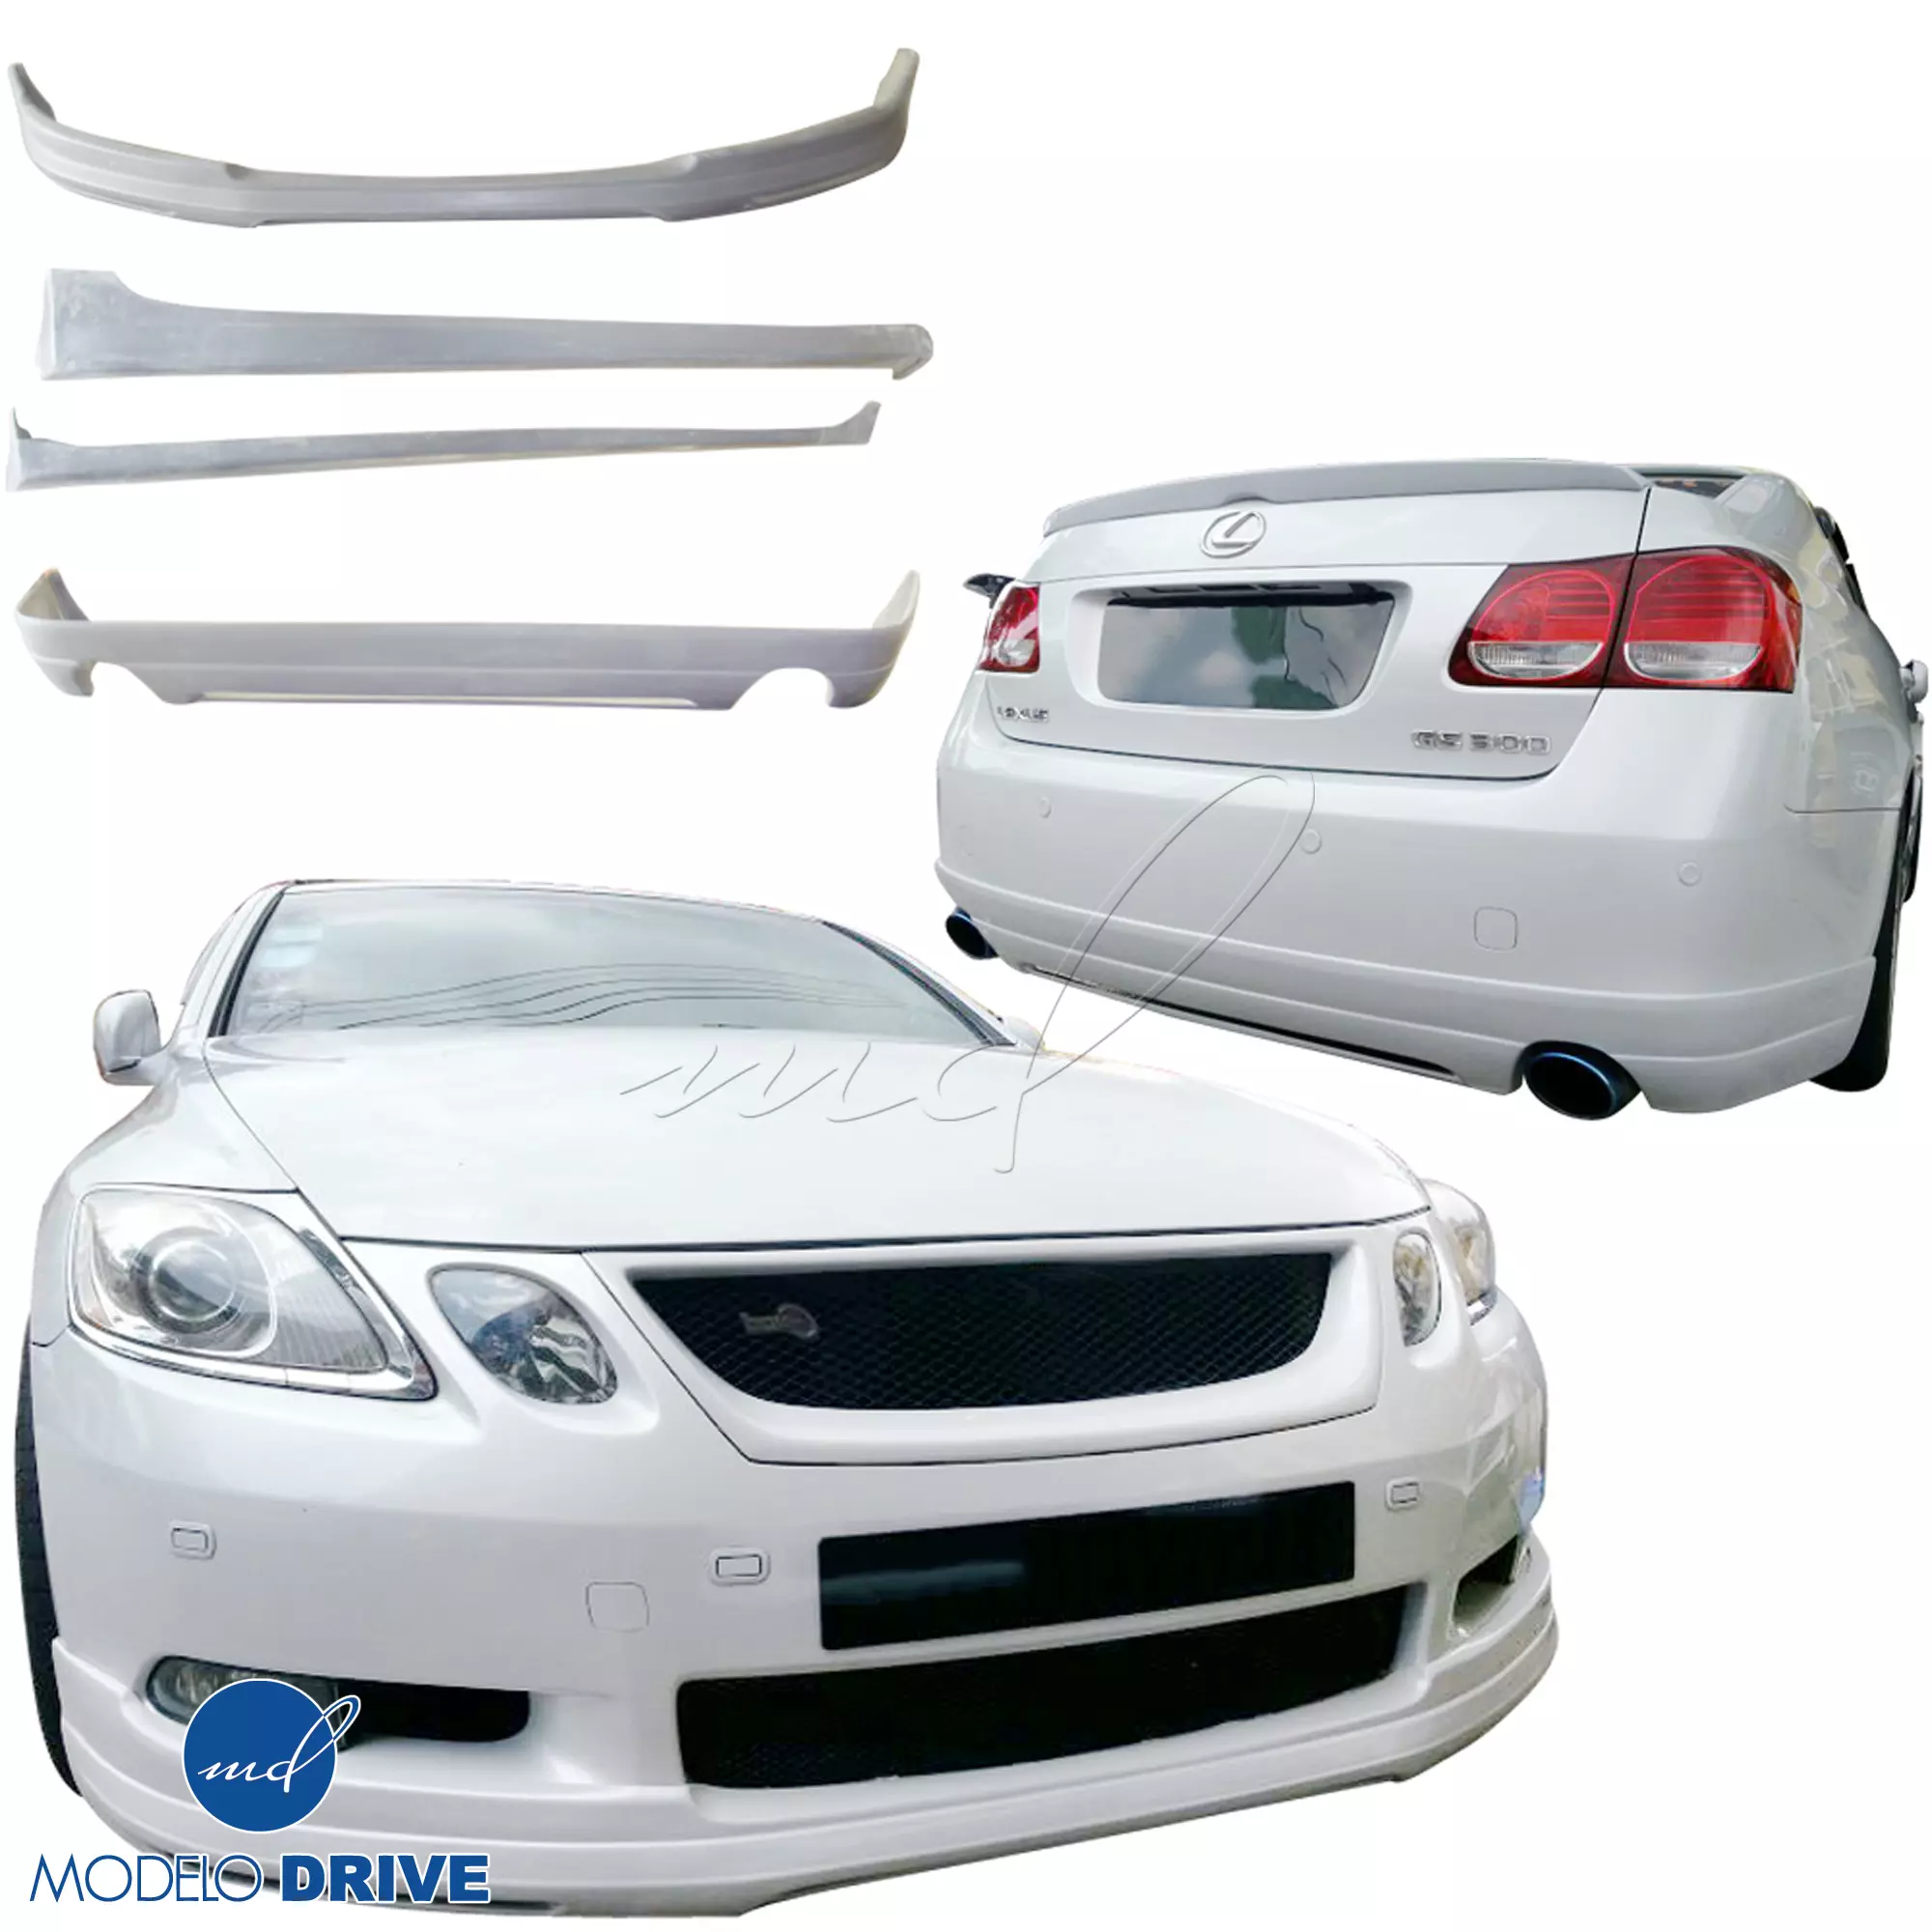 ModeloDrive FRP JPRO Body Kit 4pc > Lexus GS-Series GS300 GS350 GS430 GS450H 2006-2007 - Image 1